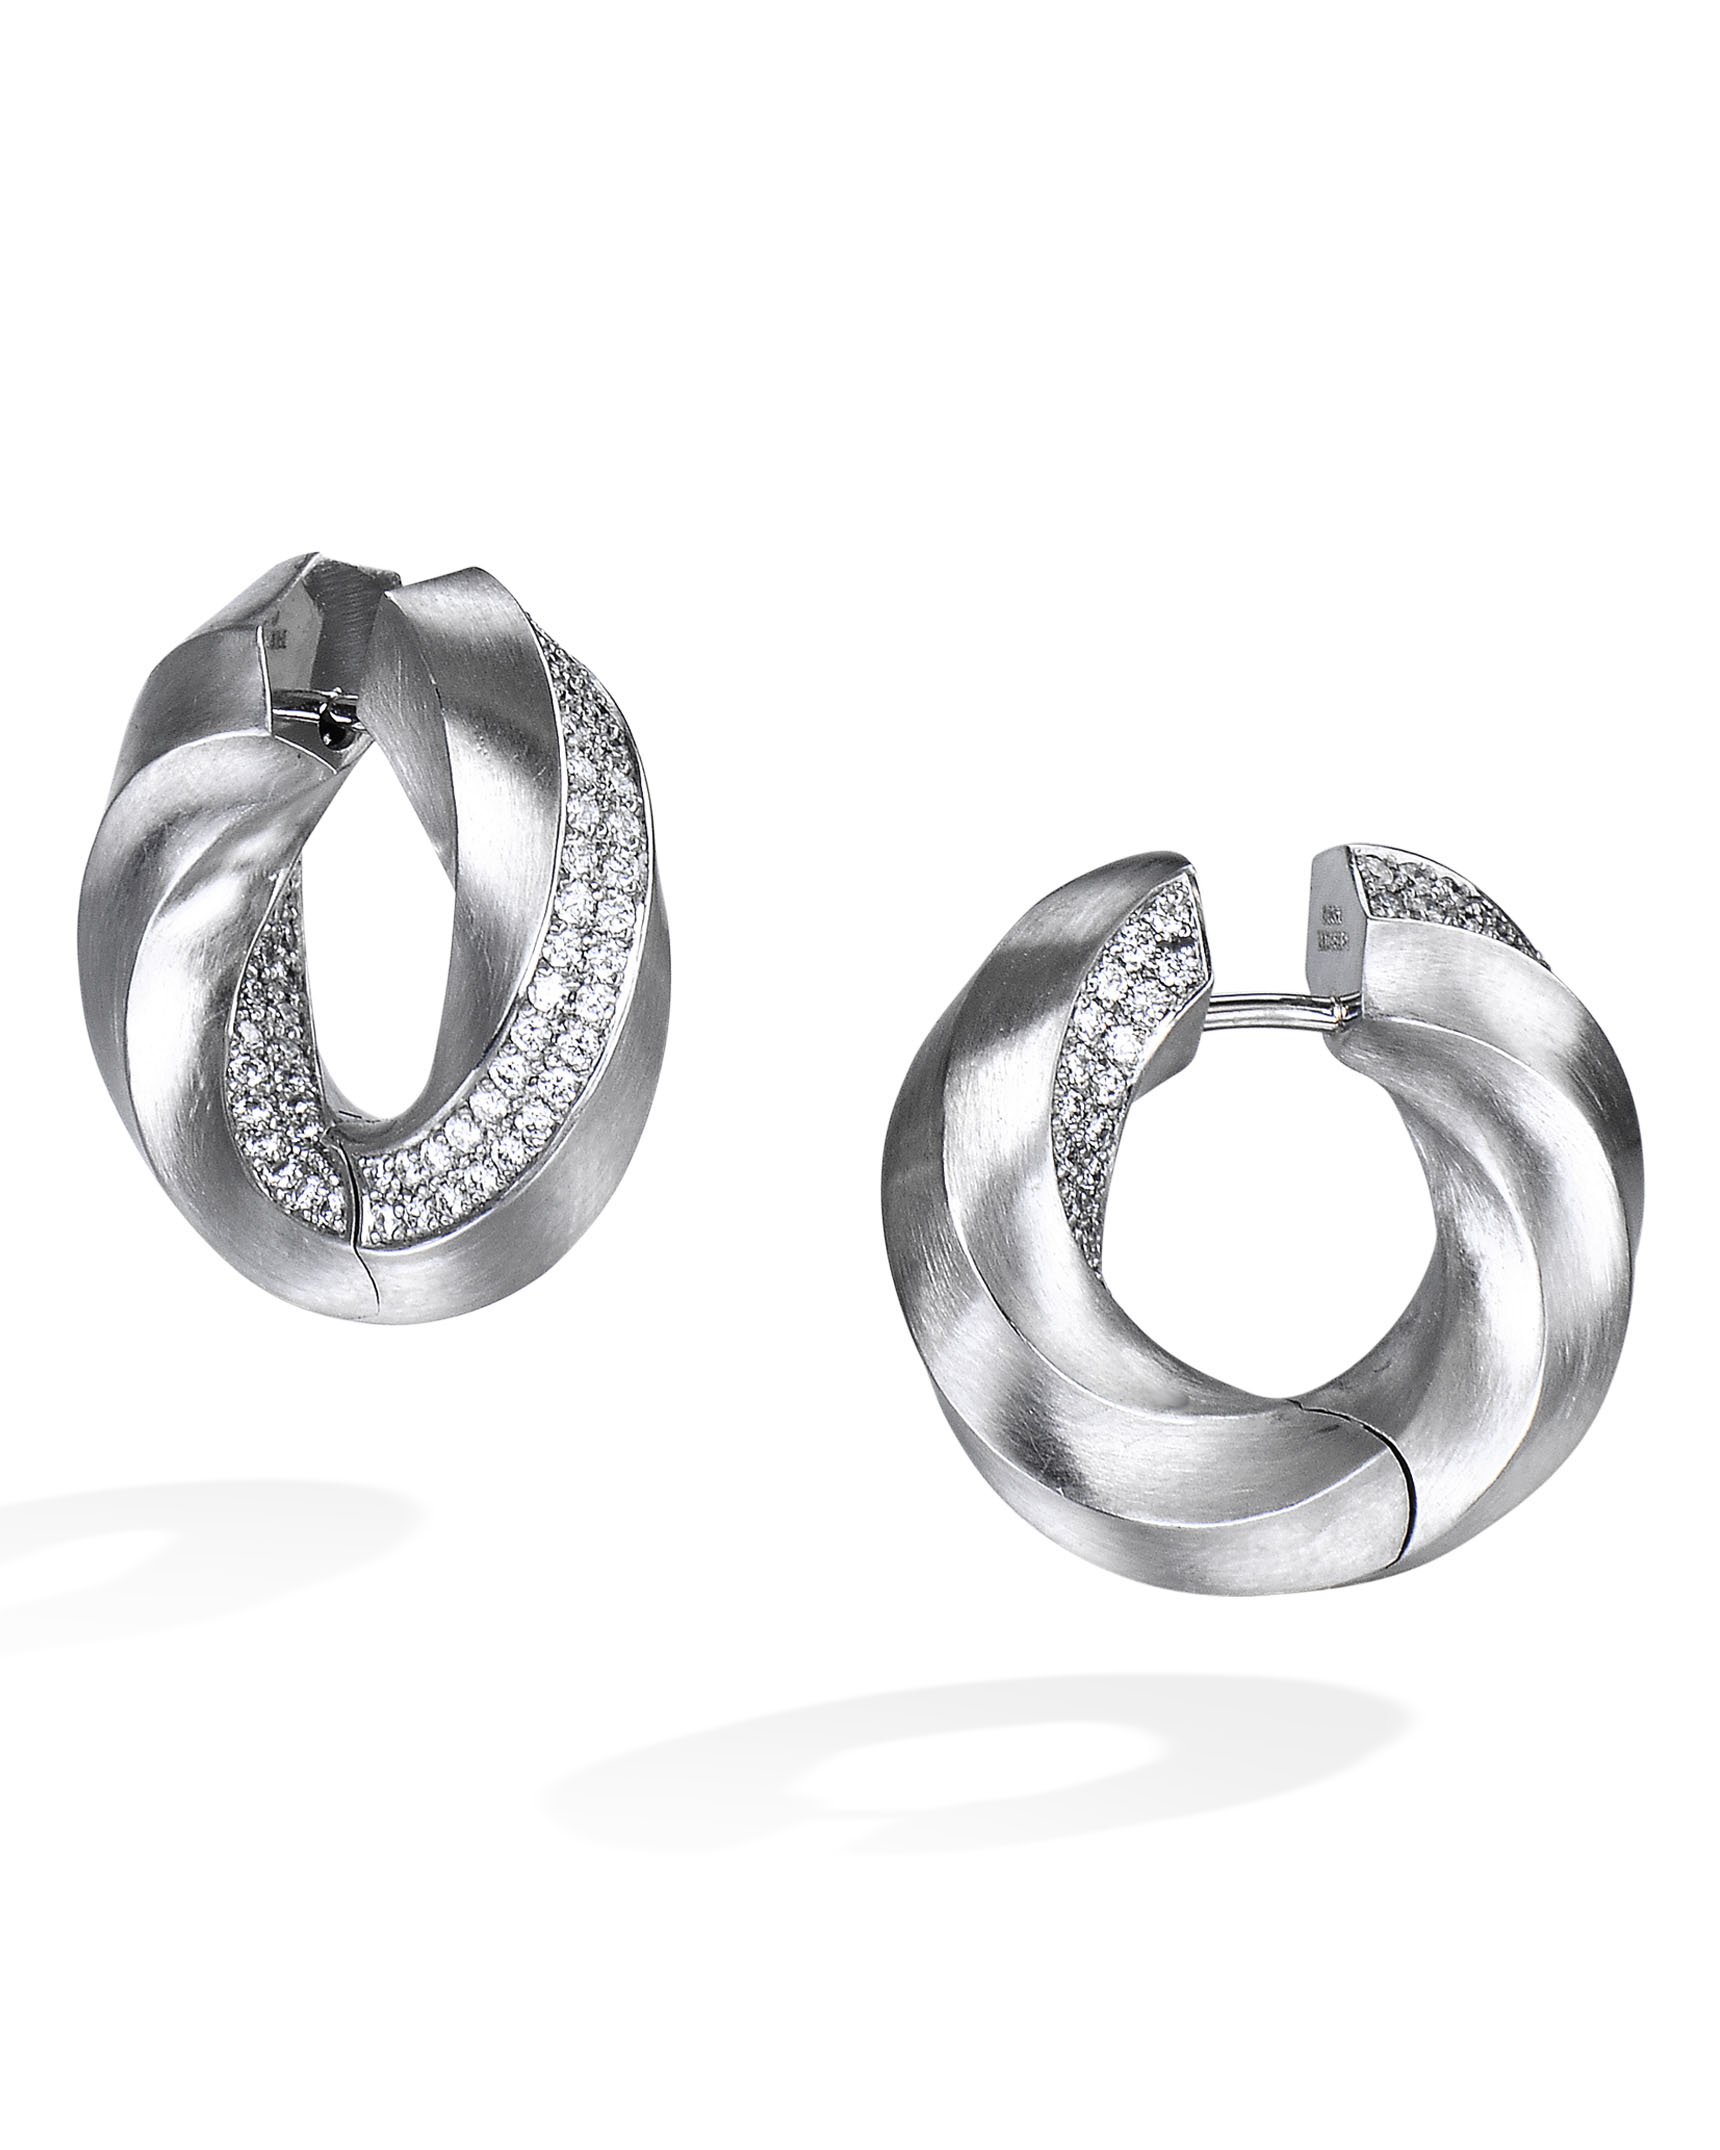 Buy exclusive Helix Earrings from LISA ELENI online!